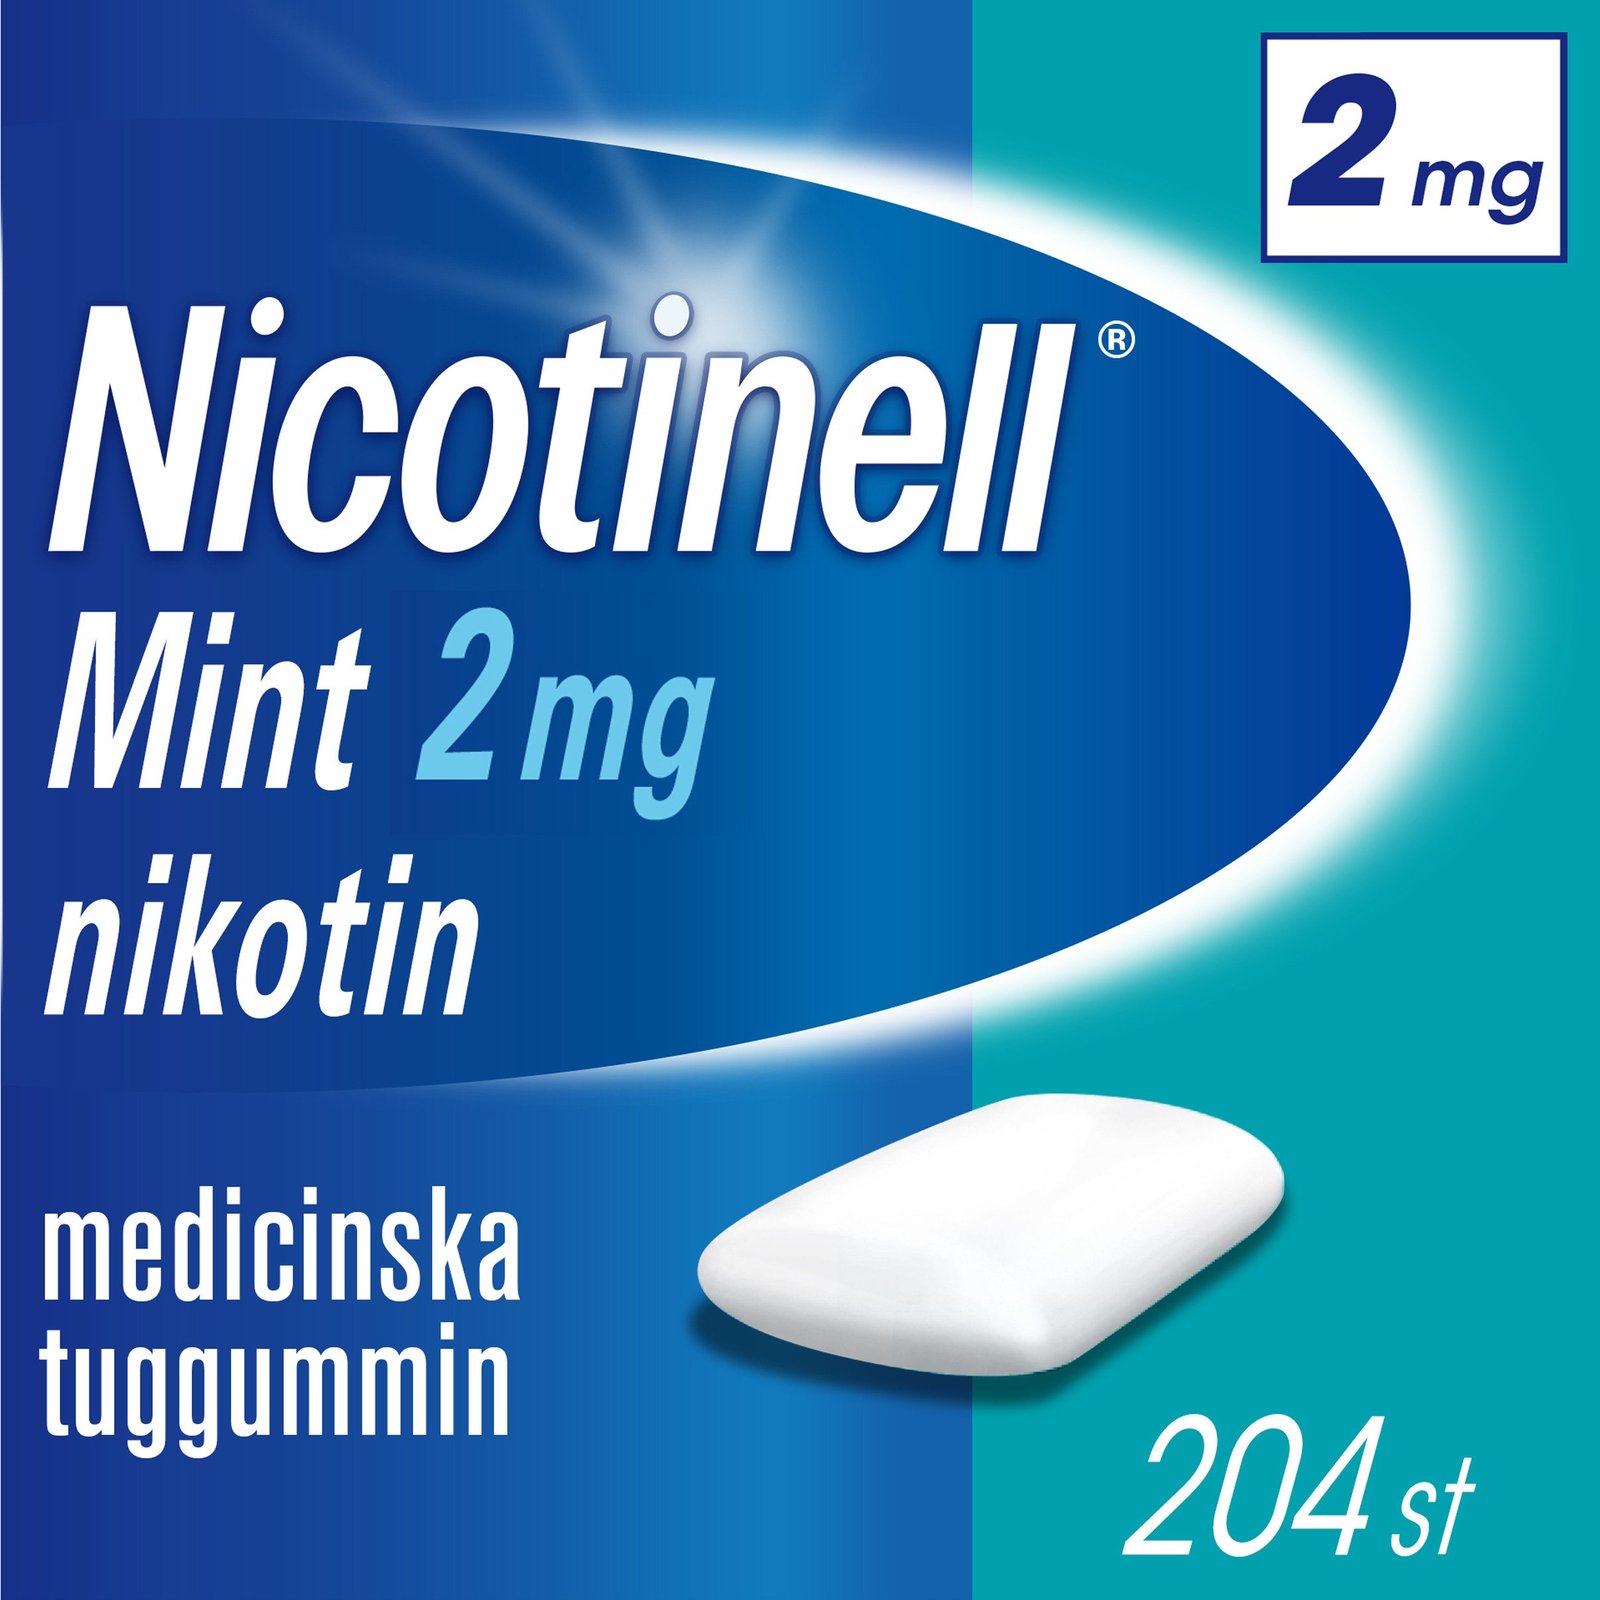 Nicotinell Mint 2mg Nikotin Medicinska tuggummin 204 st